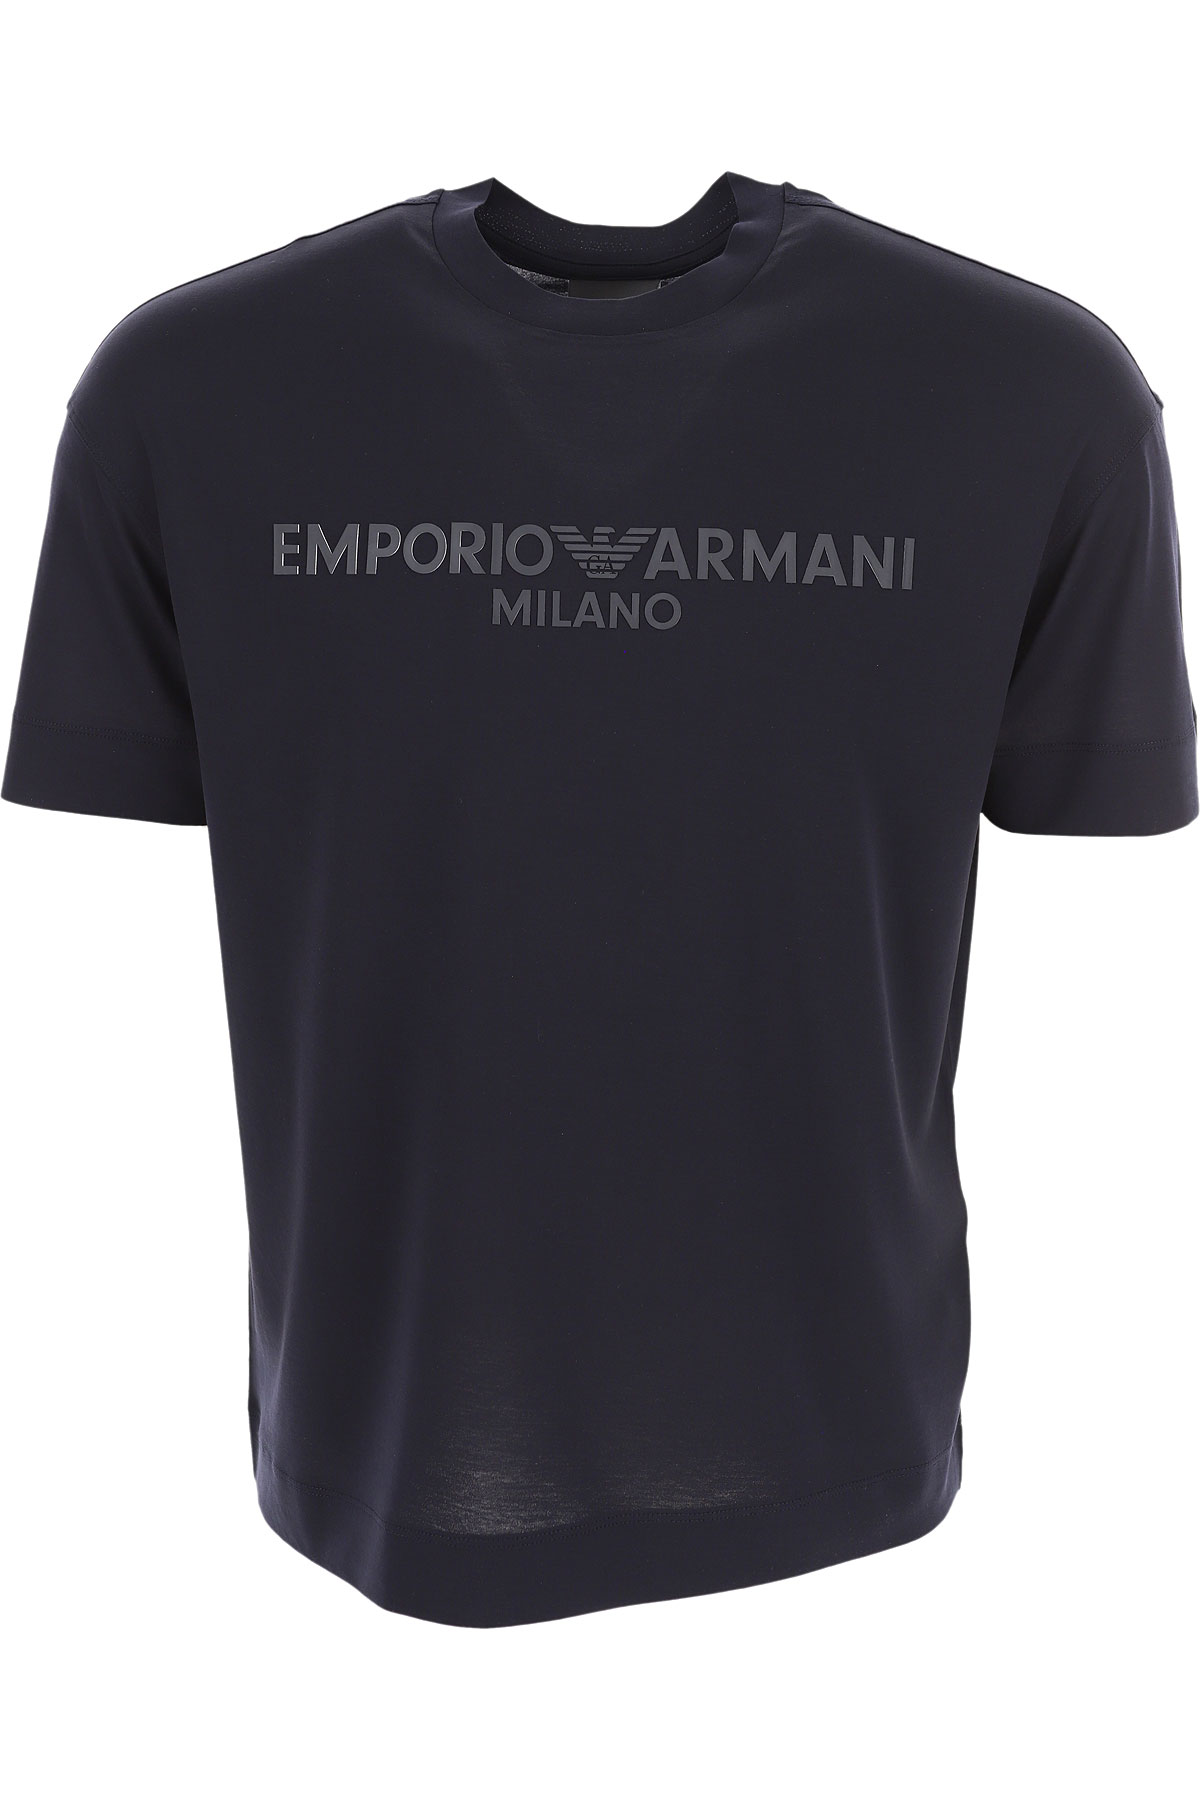 Mens Clothing Emporio Armani, Style code: 3r1tdf-1juvz-0920